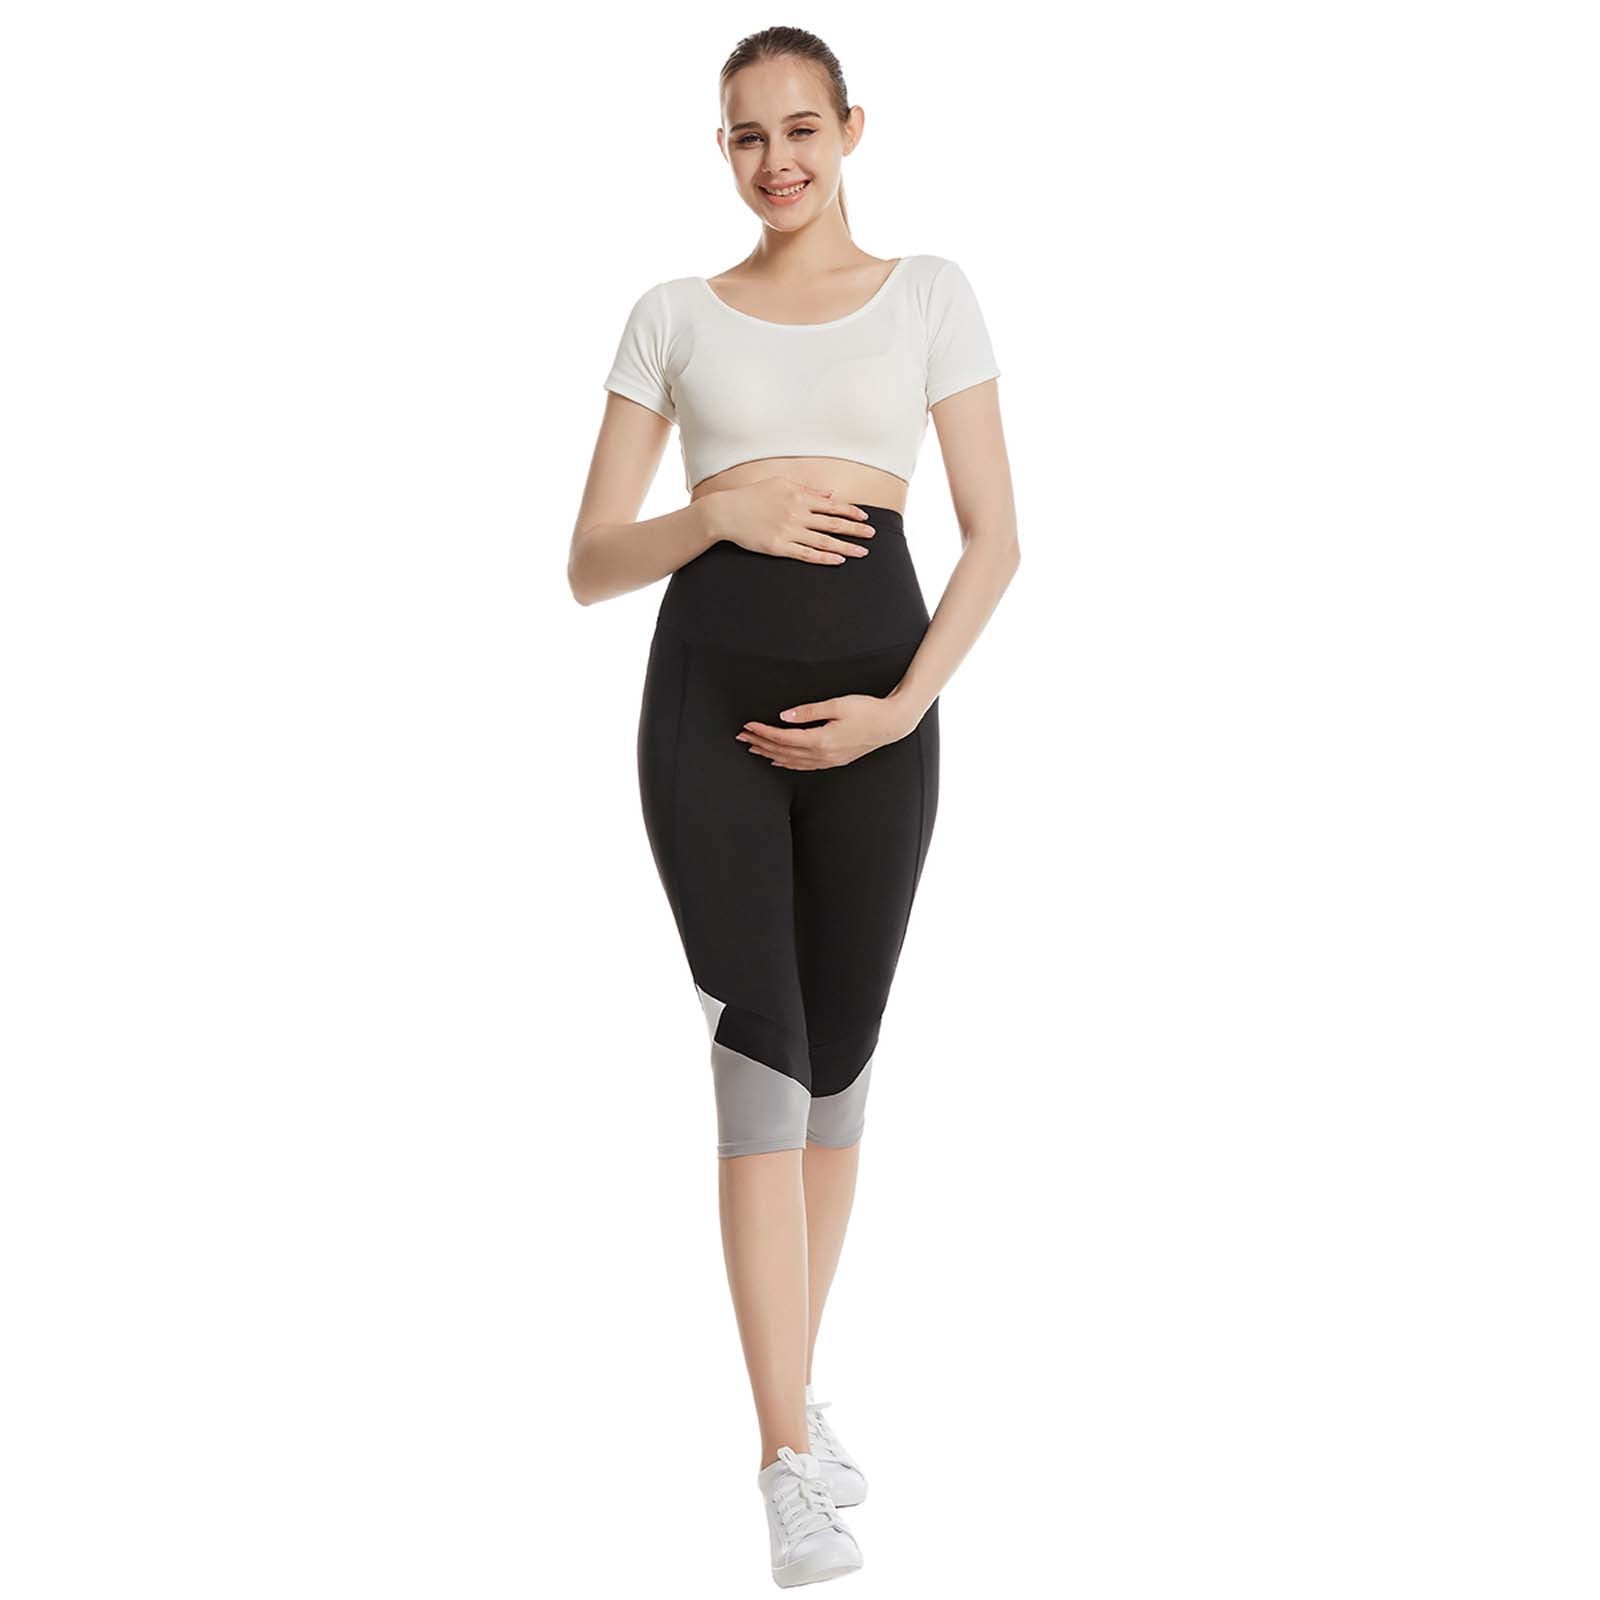 skpabo Pregnancy Leggings, Maternity Clothes/Trousers of Cotton, Pants for  Pregnant Women,Stretchy Pants Over Bump, Black, Navy Blue, Grey Melange 